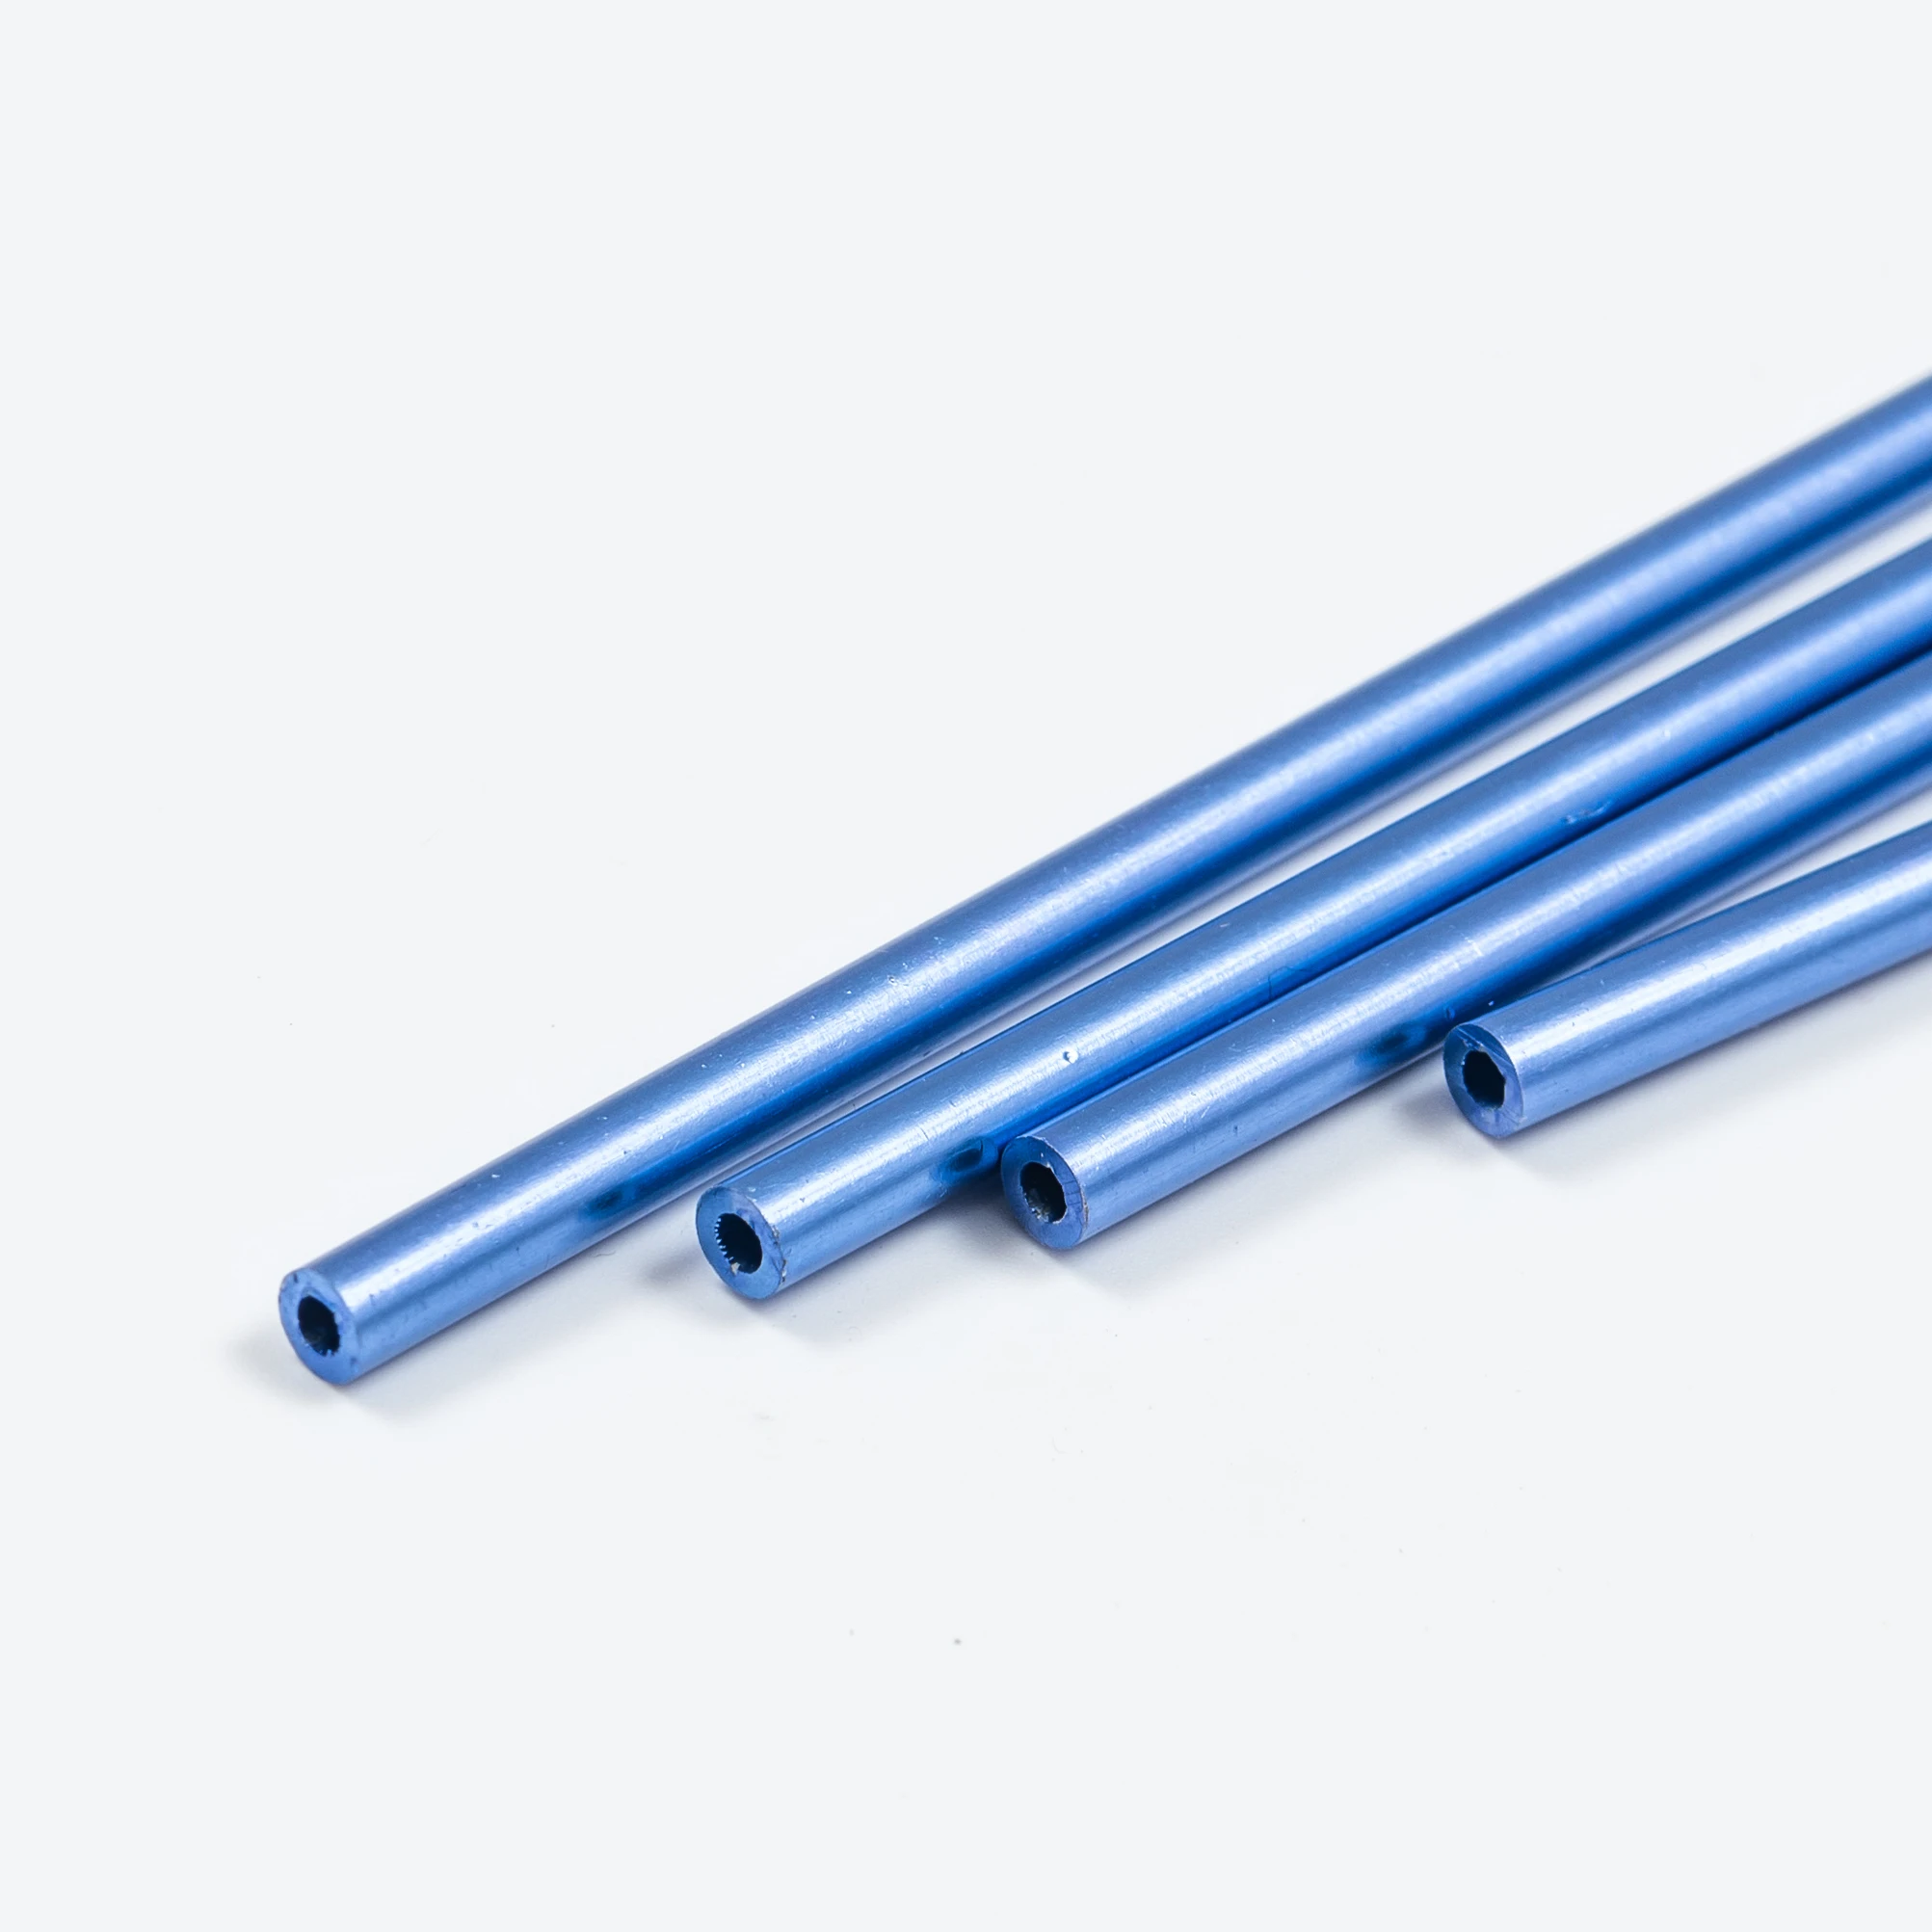 Metal tubing. Гидроформинг. P Clamp supports SS-tbp6, seamless Tubing 3/8" od x 0.035" w/t 3300# ss316/316l.